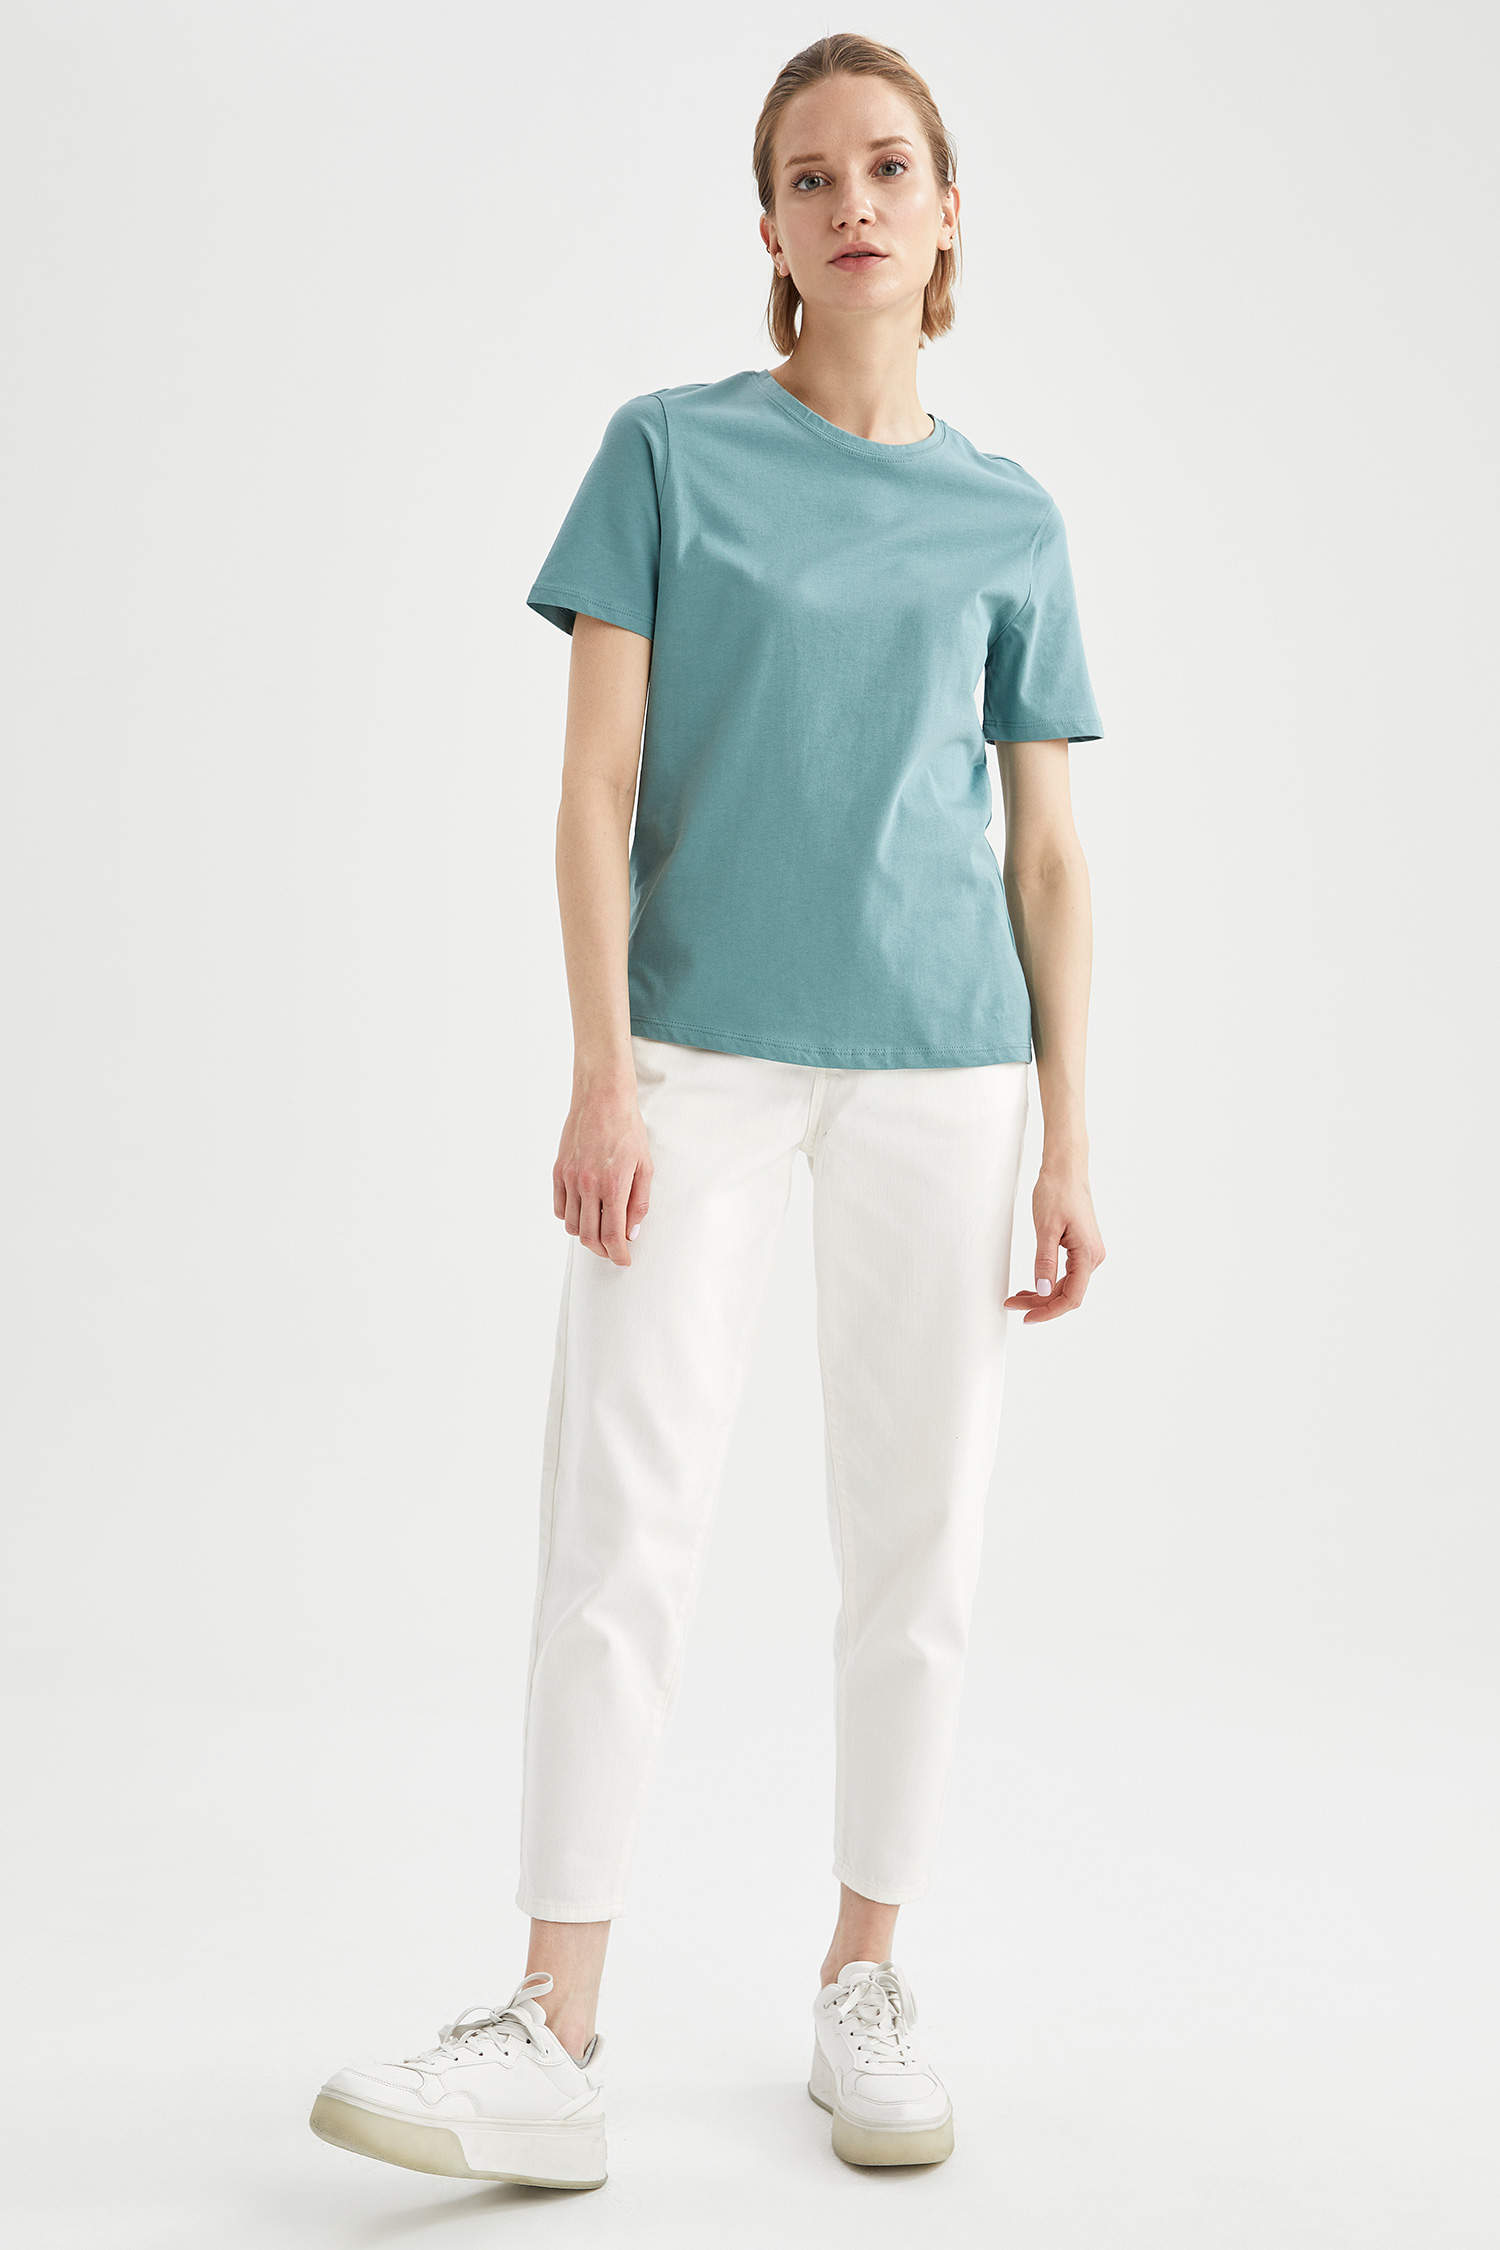 Turquoise WOMAN Short-Sleeved Regular Fit C-Neck Plain T-Shirt 1914707 ...